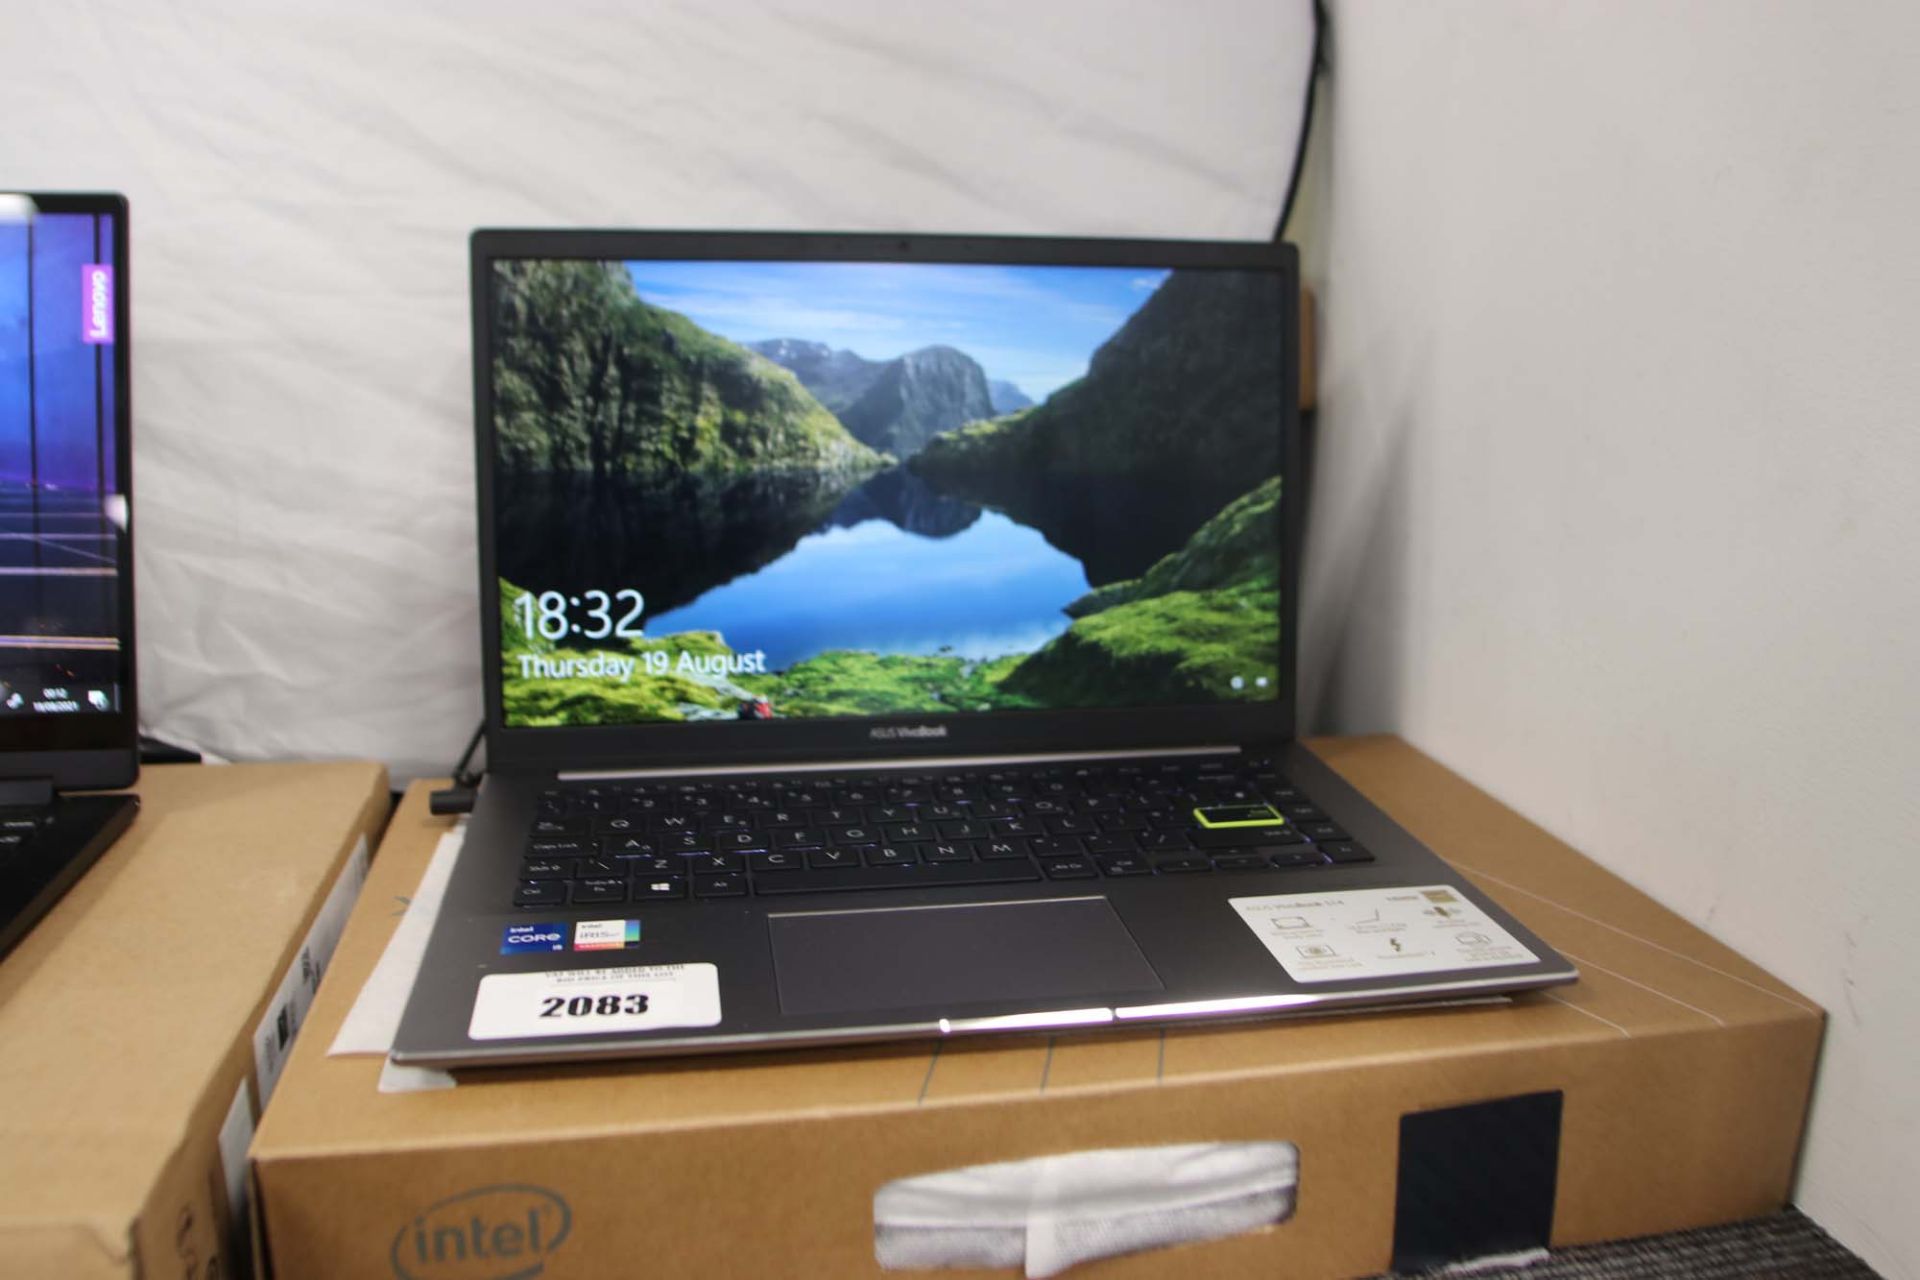 2104 - Asus Vivo Book laptop, core i5 11th generation processor, 8GB RAM, 512GB storage, Windows 10,